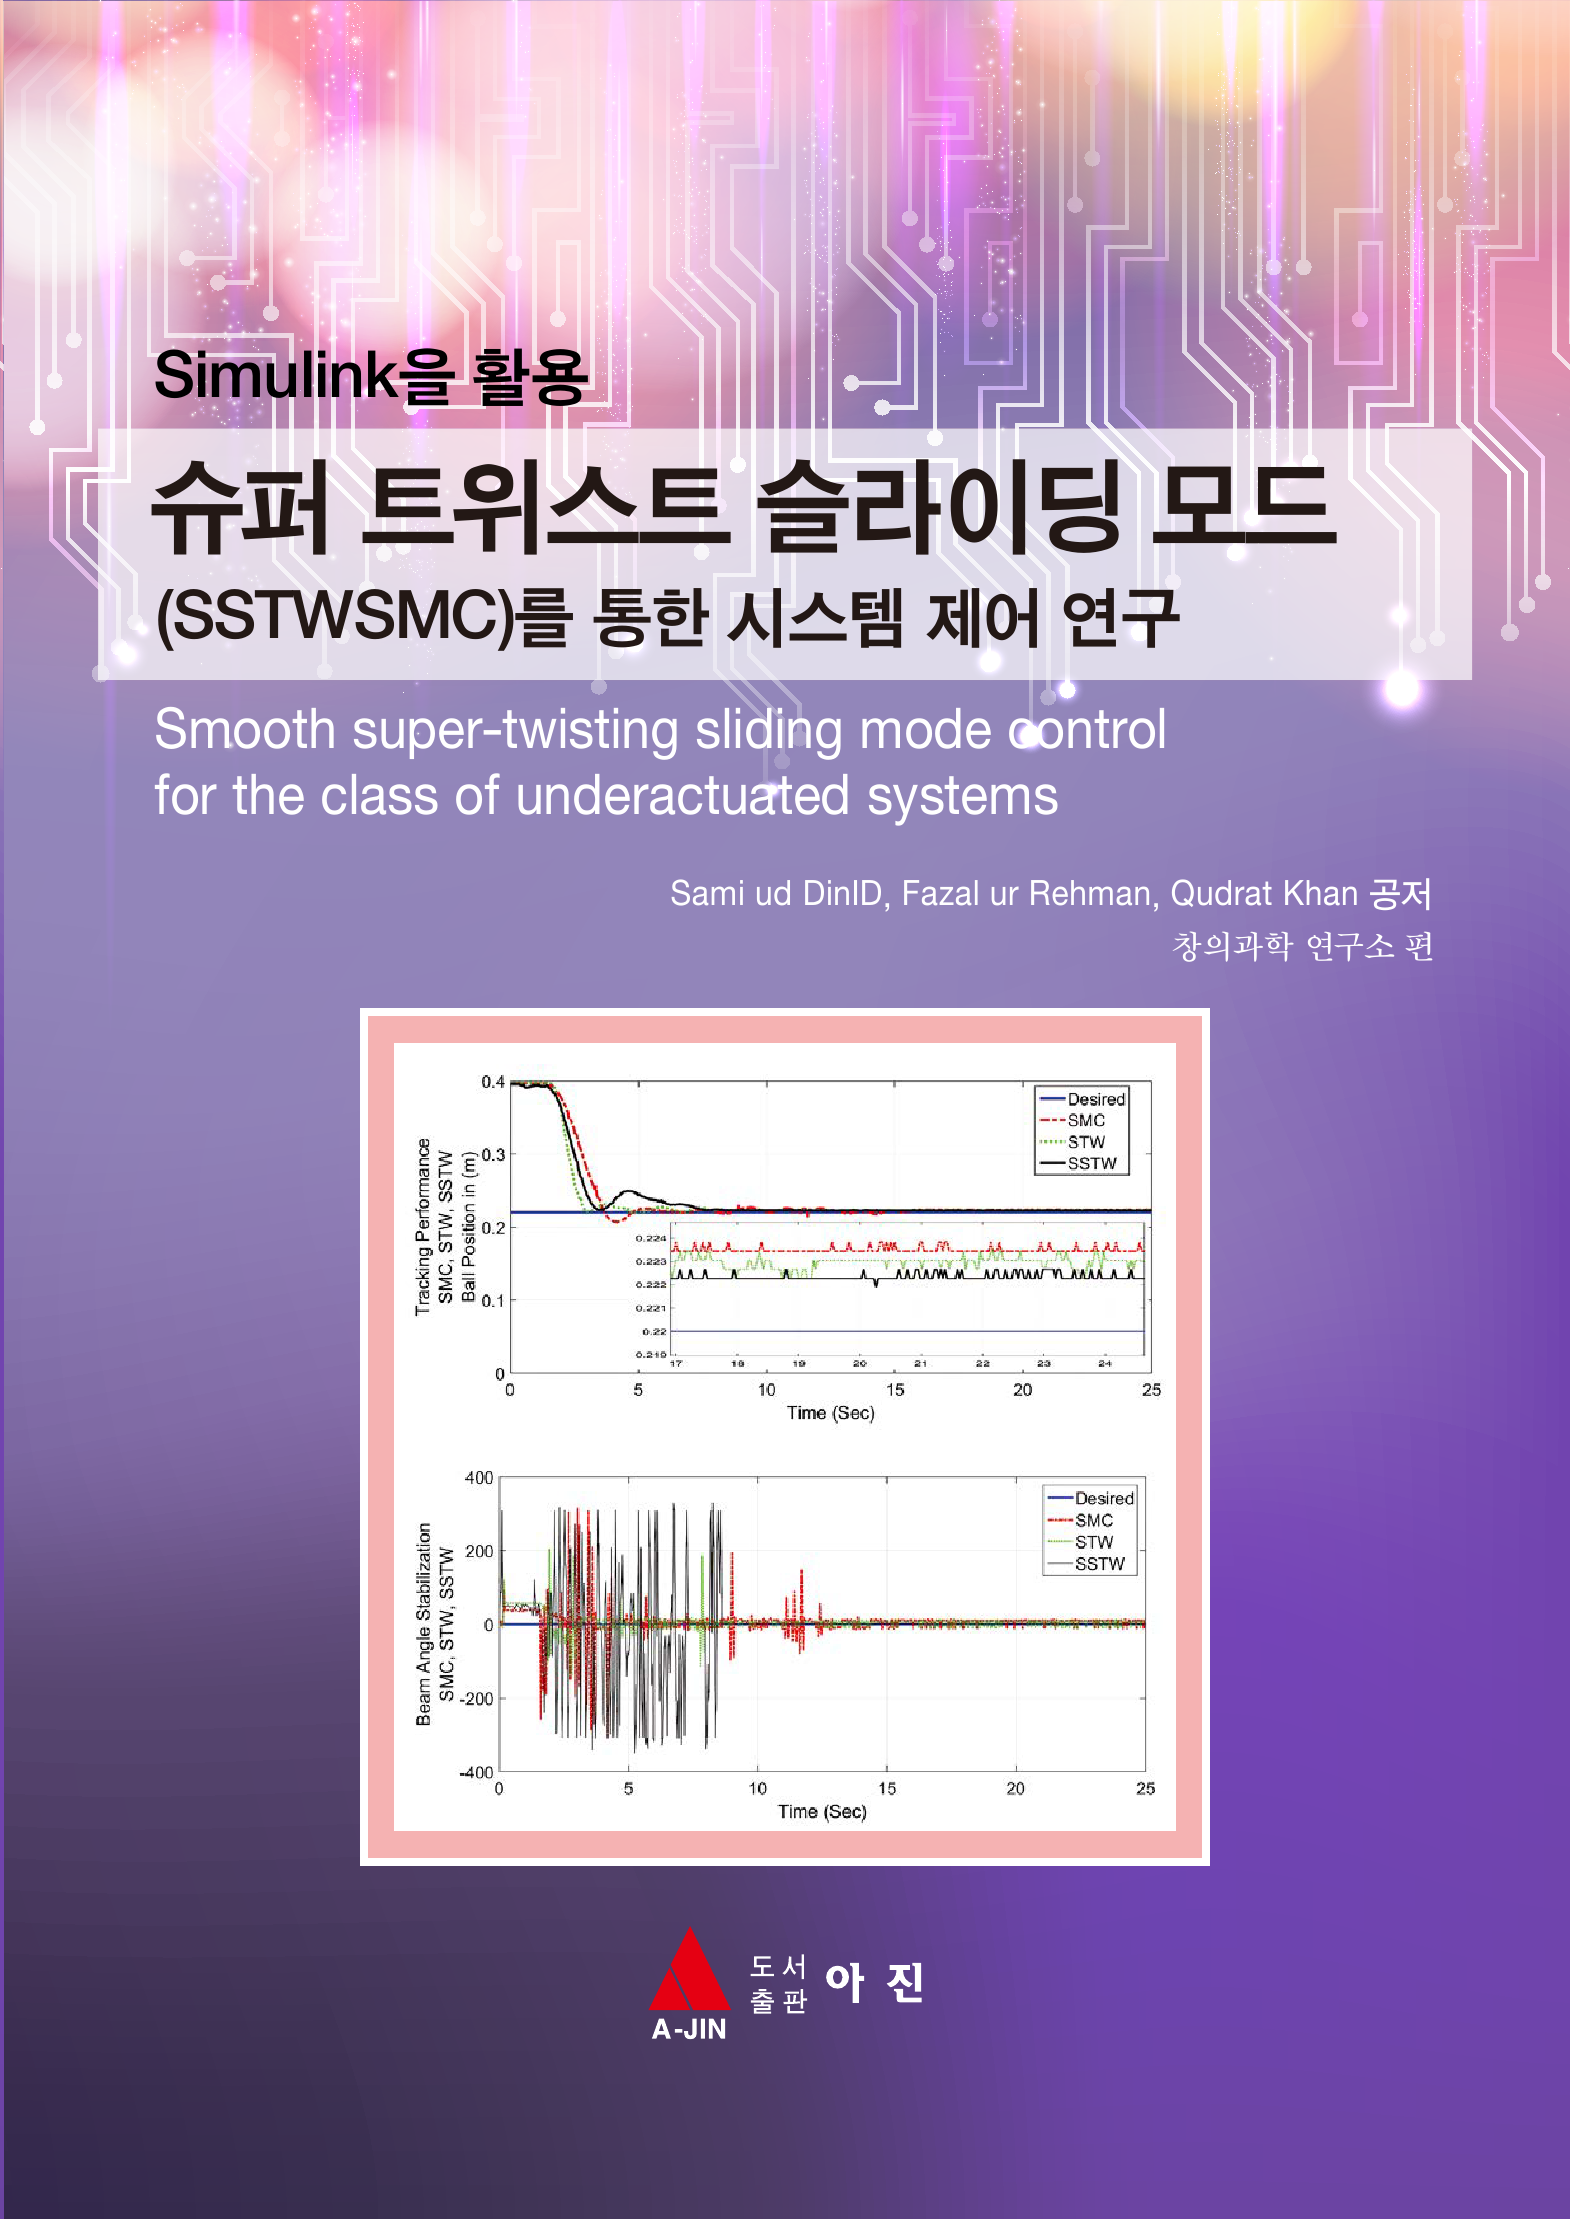 Simulink을 활용 슈퍼 트위스트 슬라이딩 모드(SSTWSMC)를 통한 시스템 제어 연구